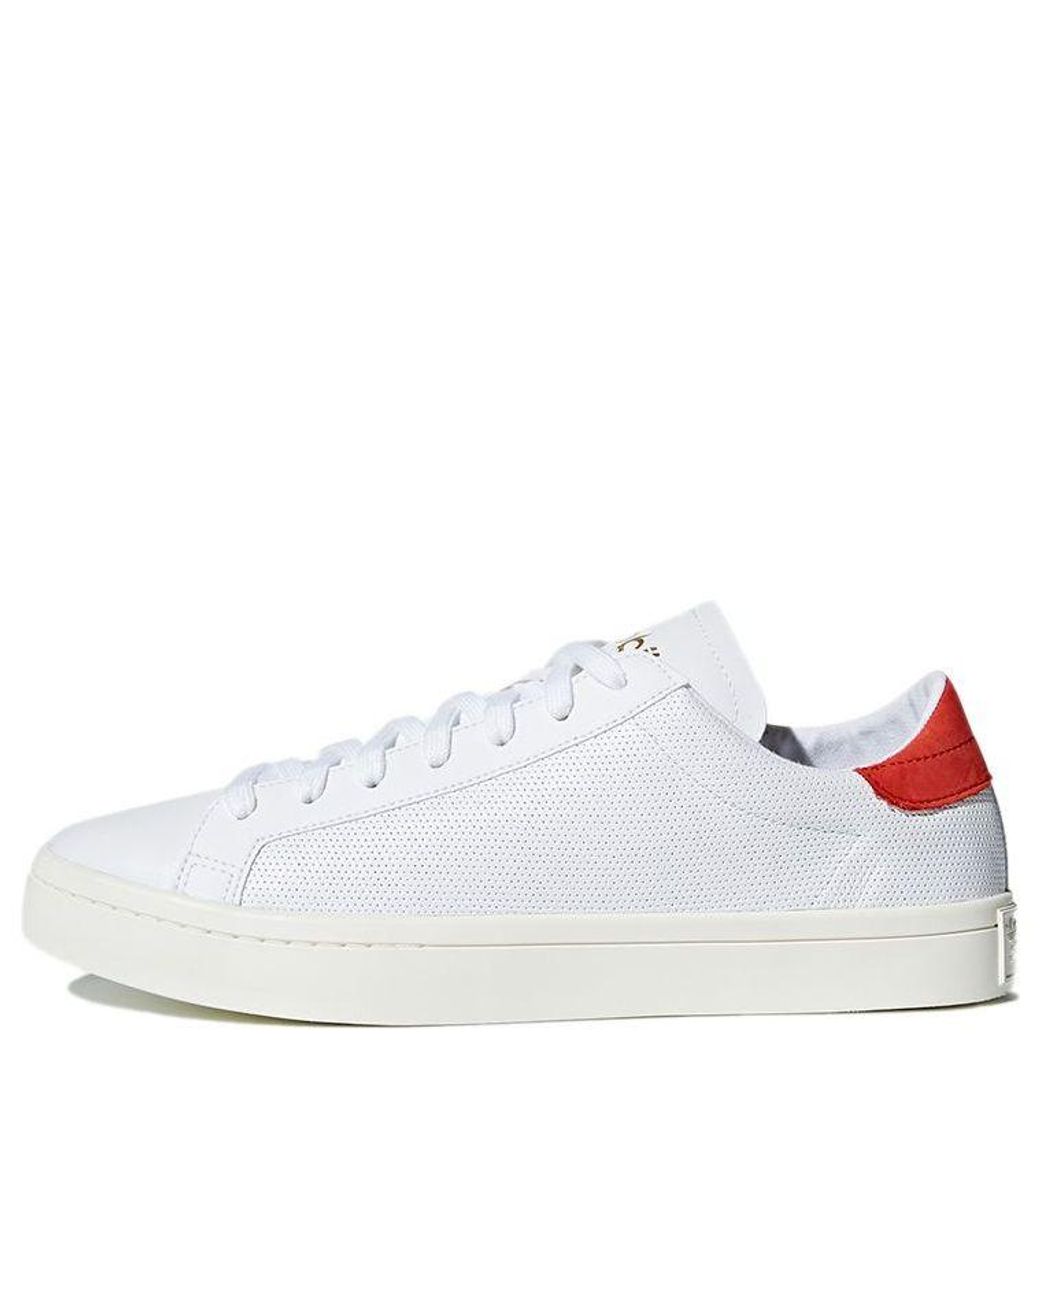 adidas Originals Courtvantage Casual Skate Shoes White Red | Lyst